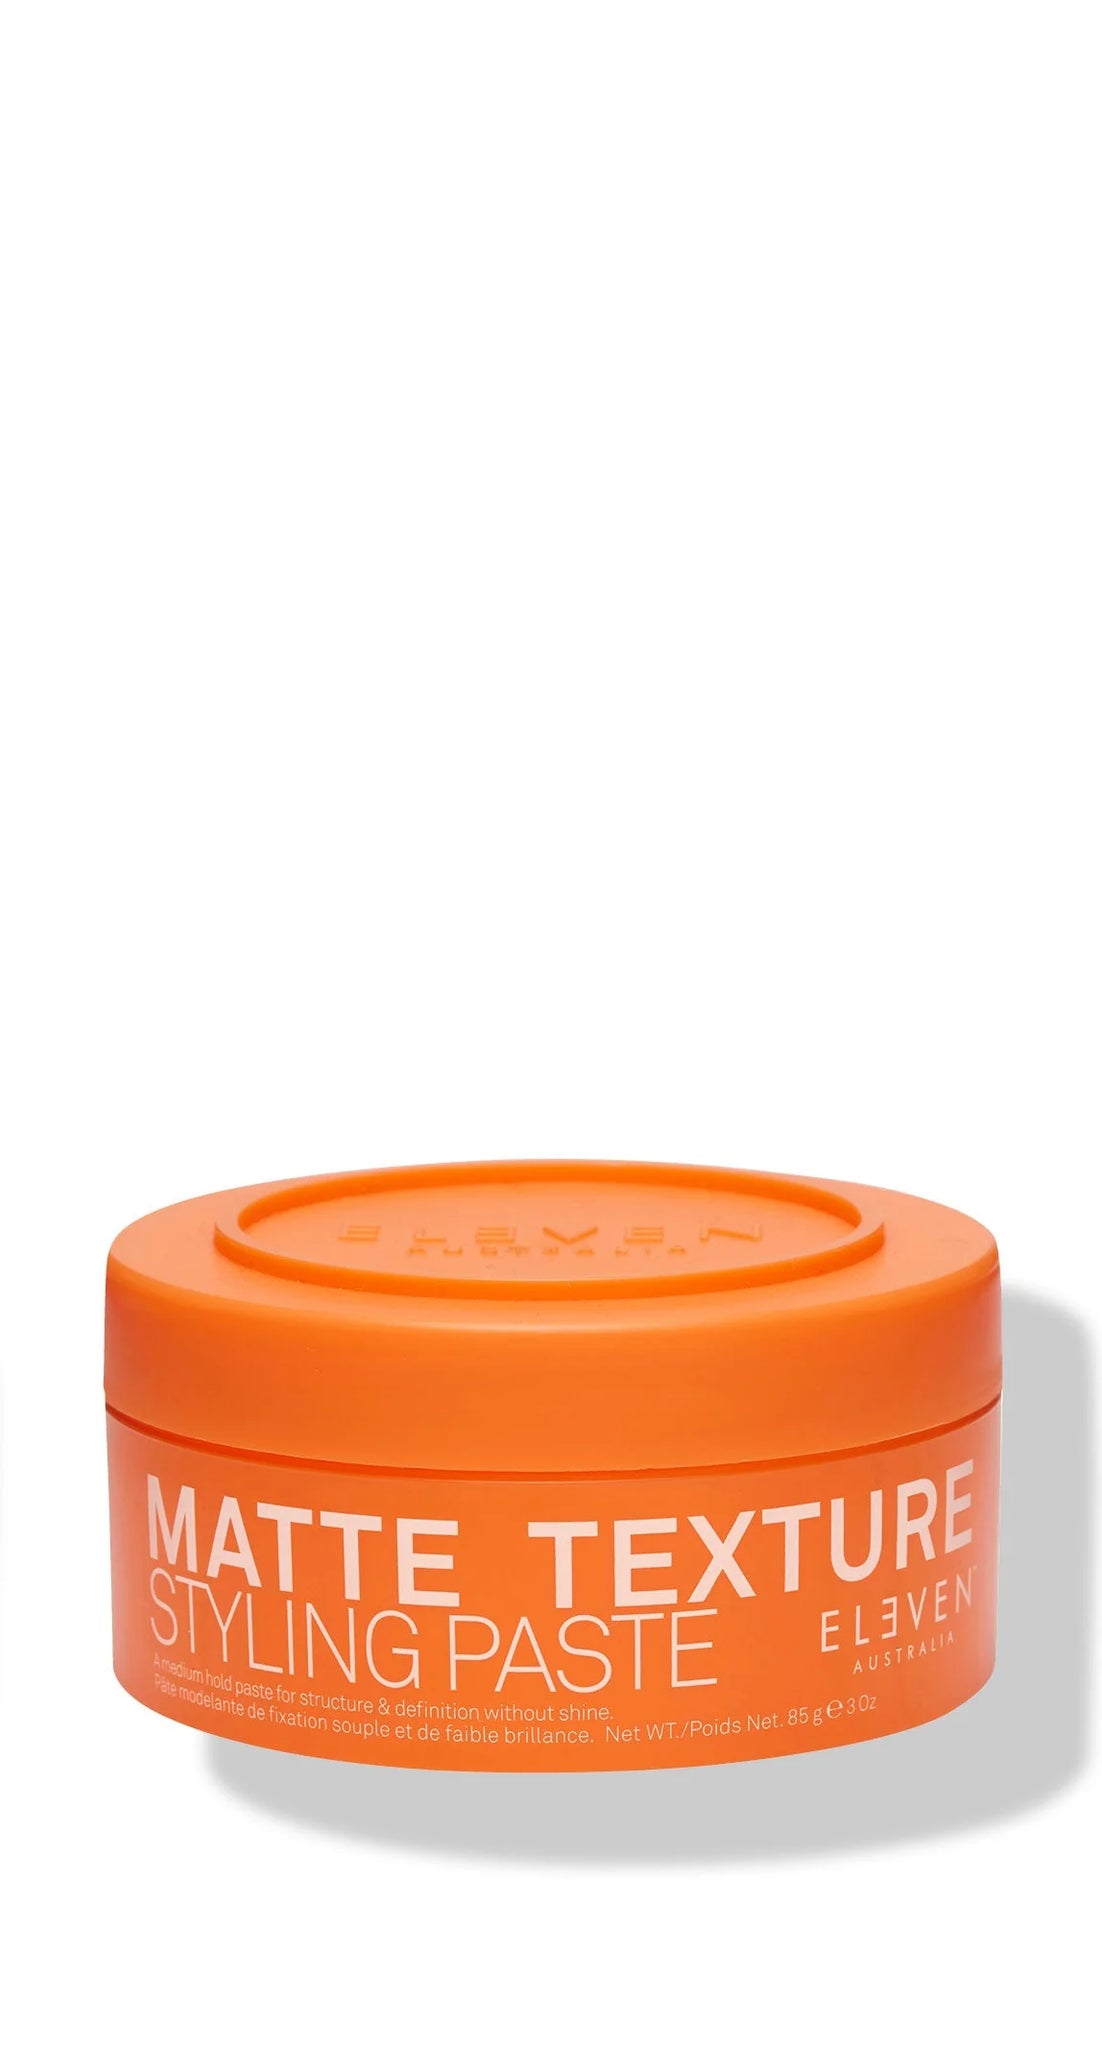 ELEVEN Matte Texture Styling Paste